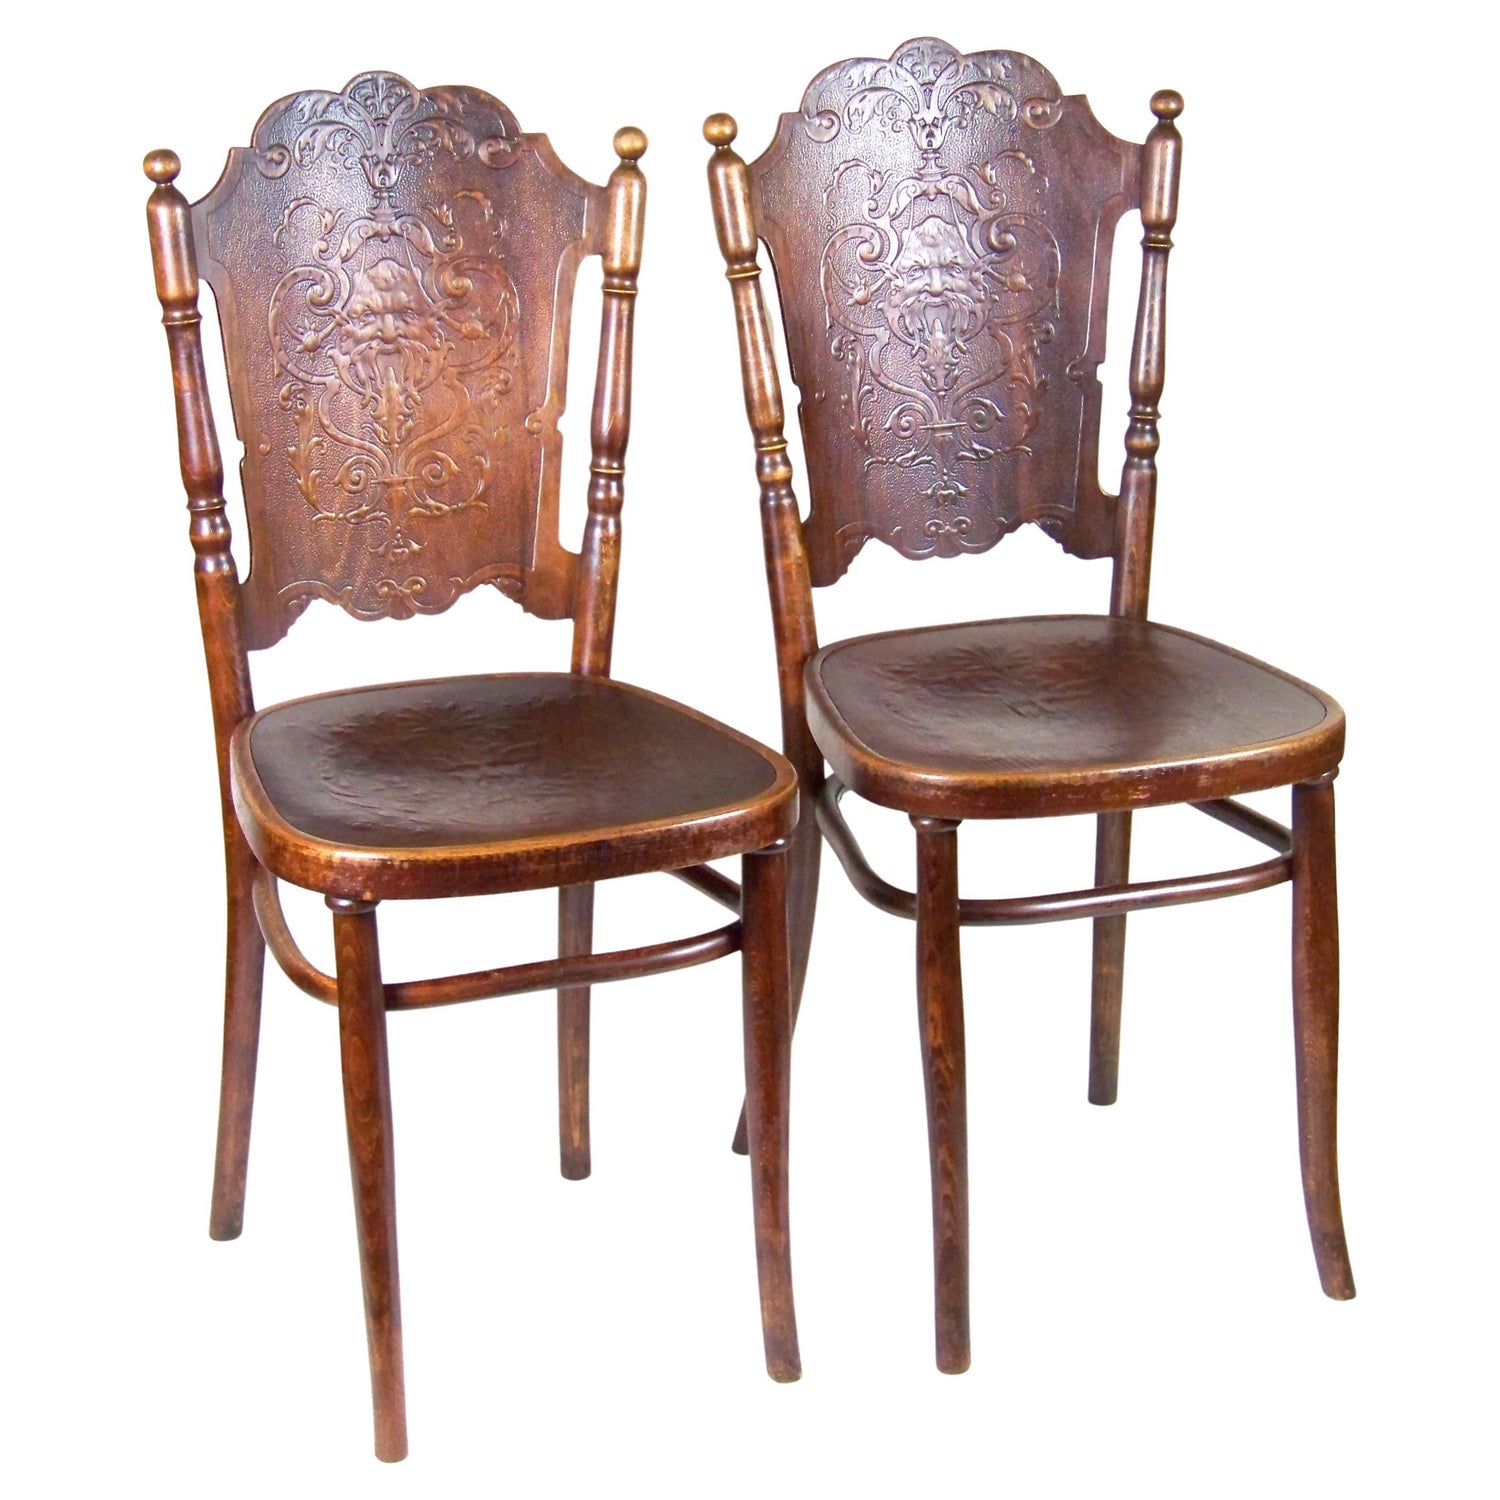 J. and J. Kohn Vienna Art Nouveau Bentwood Two Chairs Nr. 243 Mahogany  c.1905 at 1stDibs